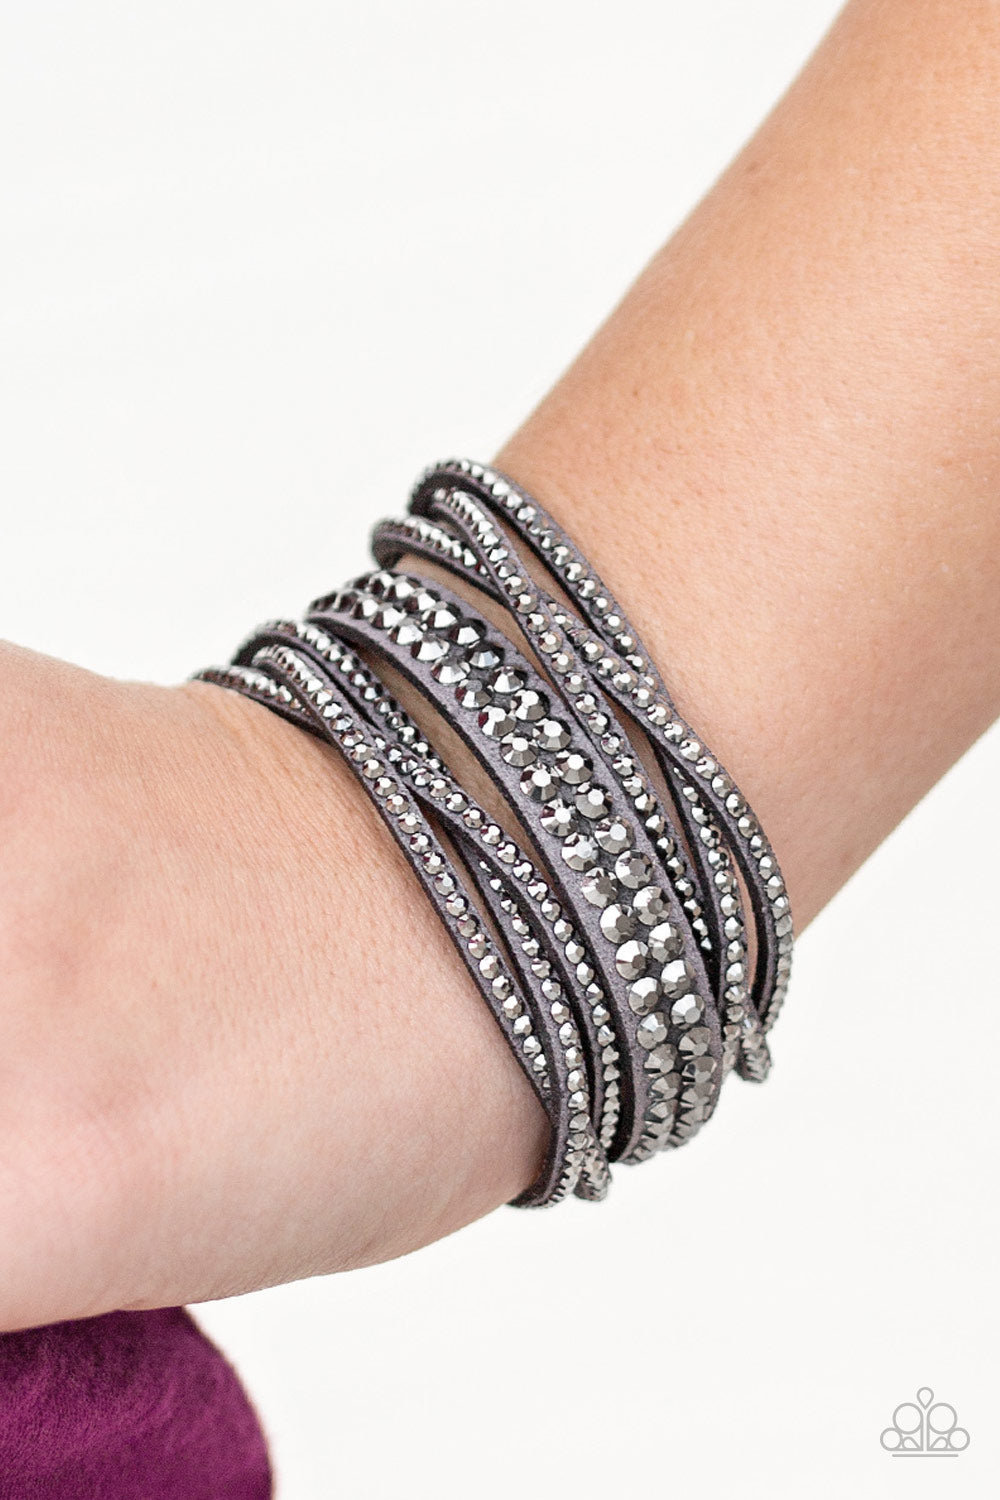 Friends who Slay Together - silver - Paparazzi bracelets